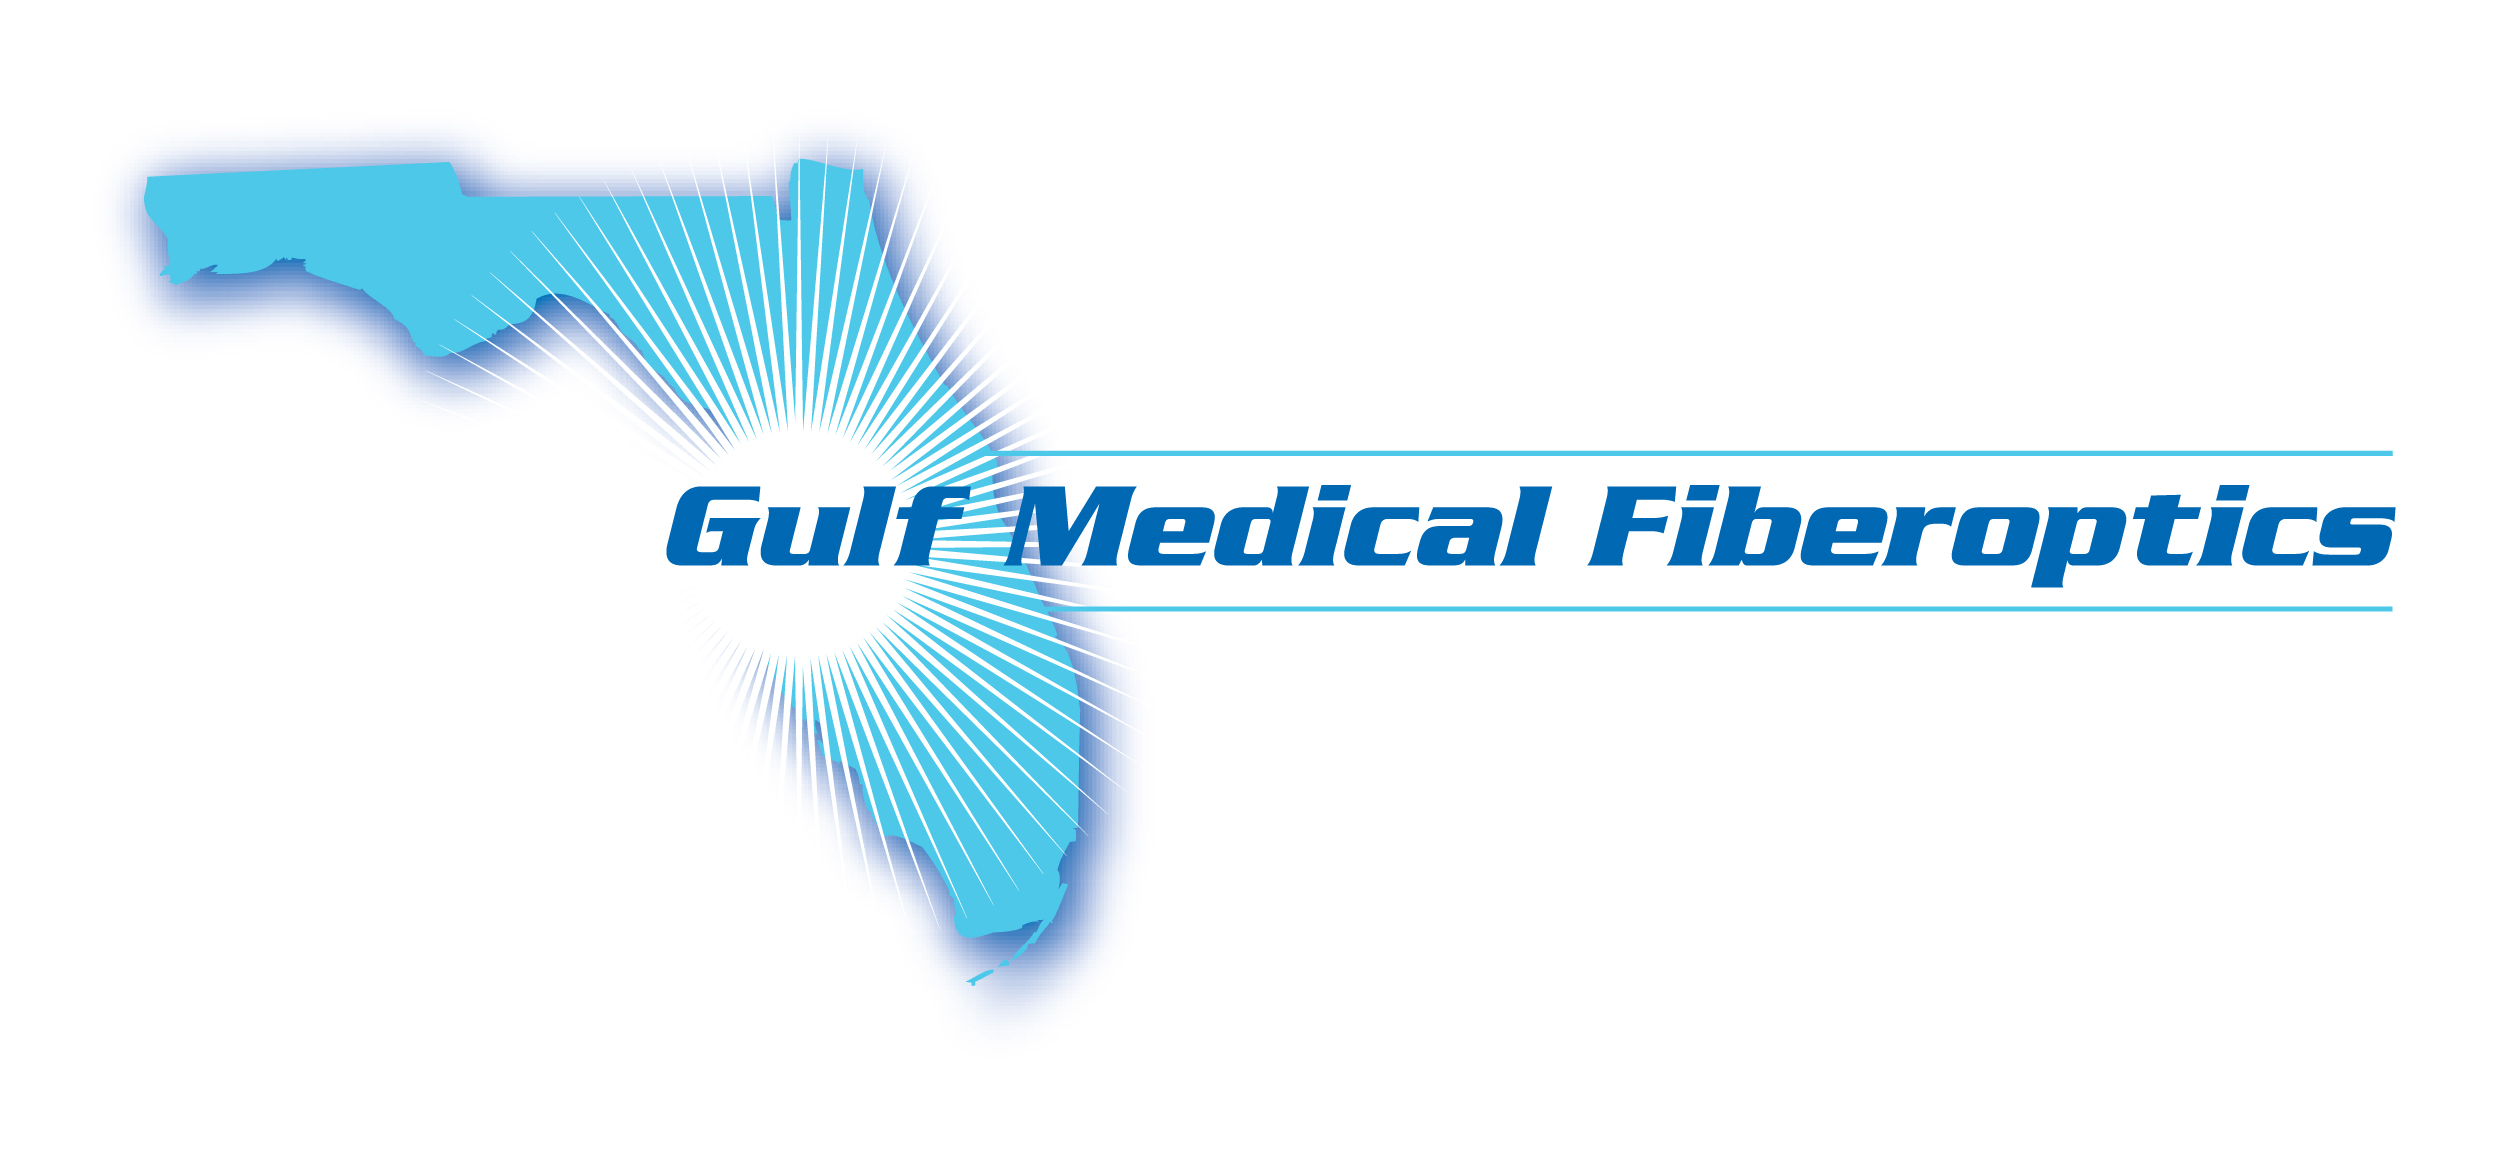 Gulf Medical Fiberoptics